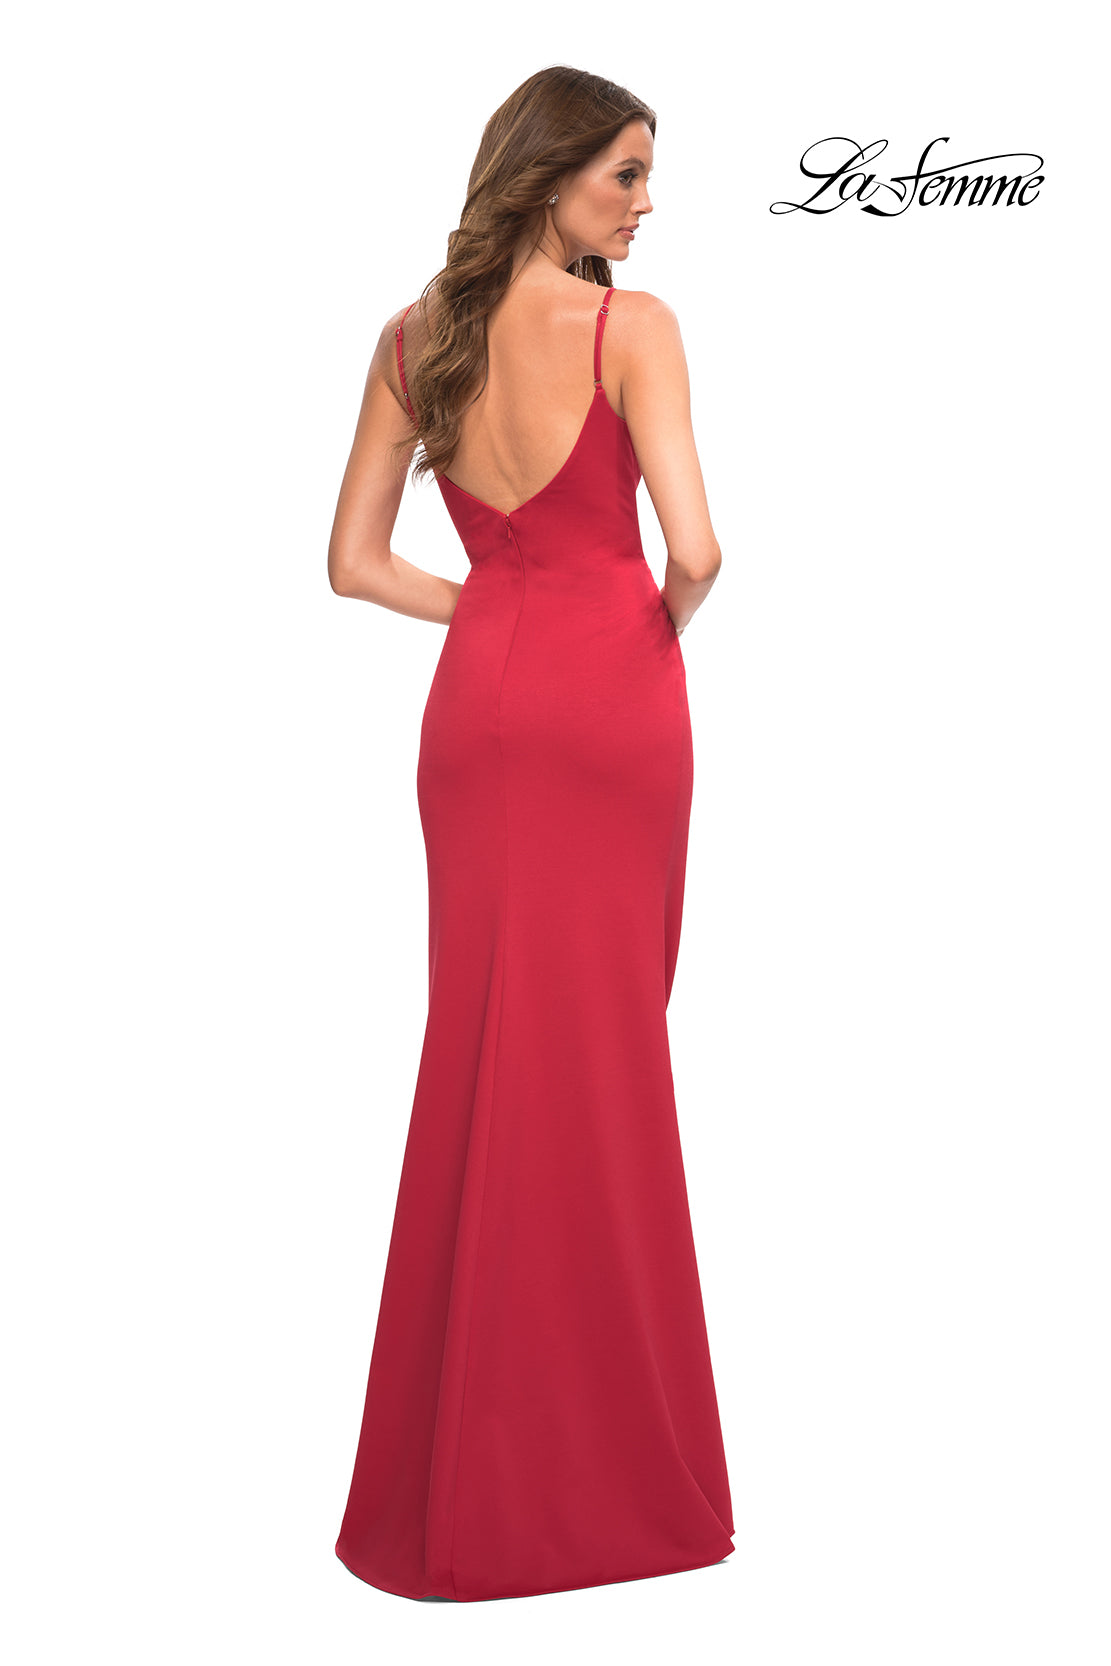  La Femme Simple Long Jersey Prom Dress with Slit